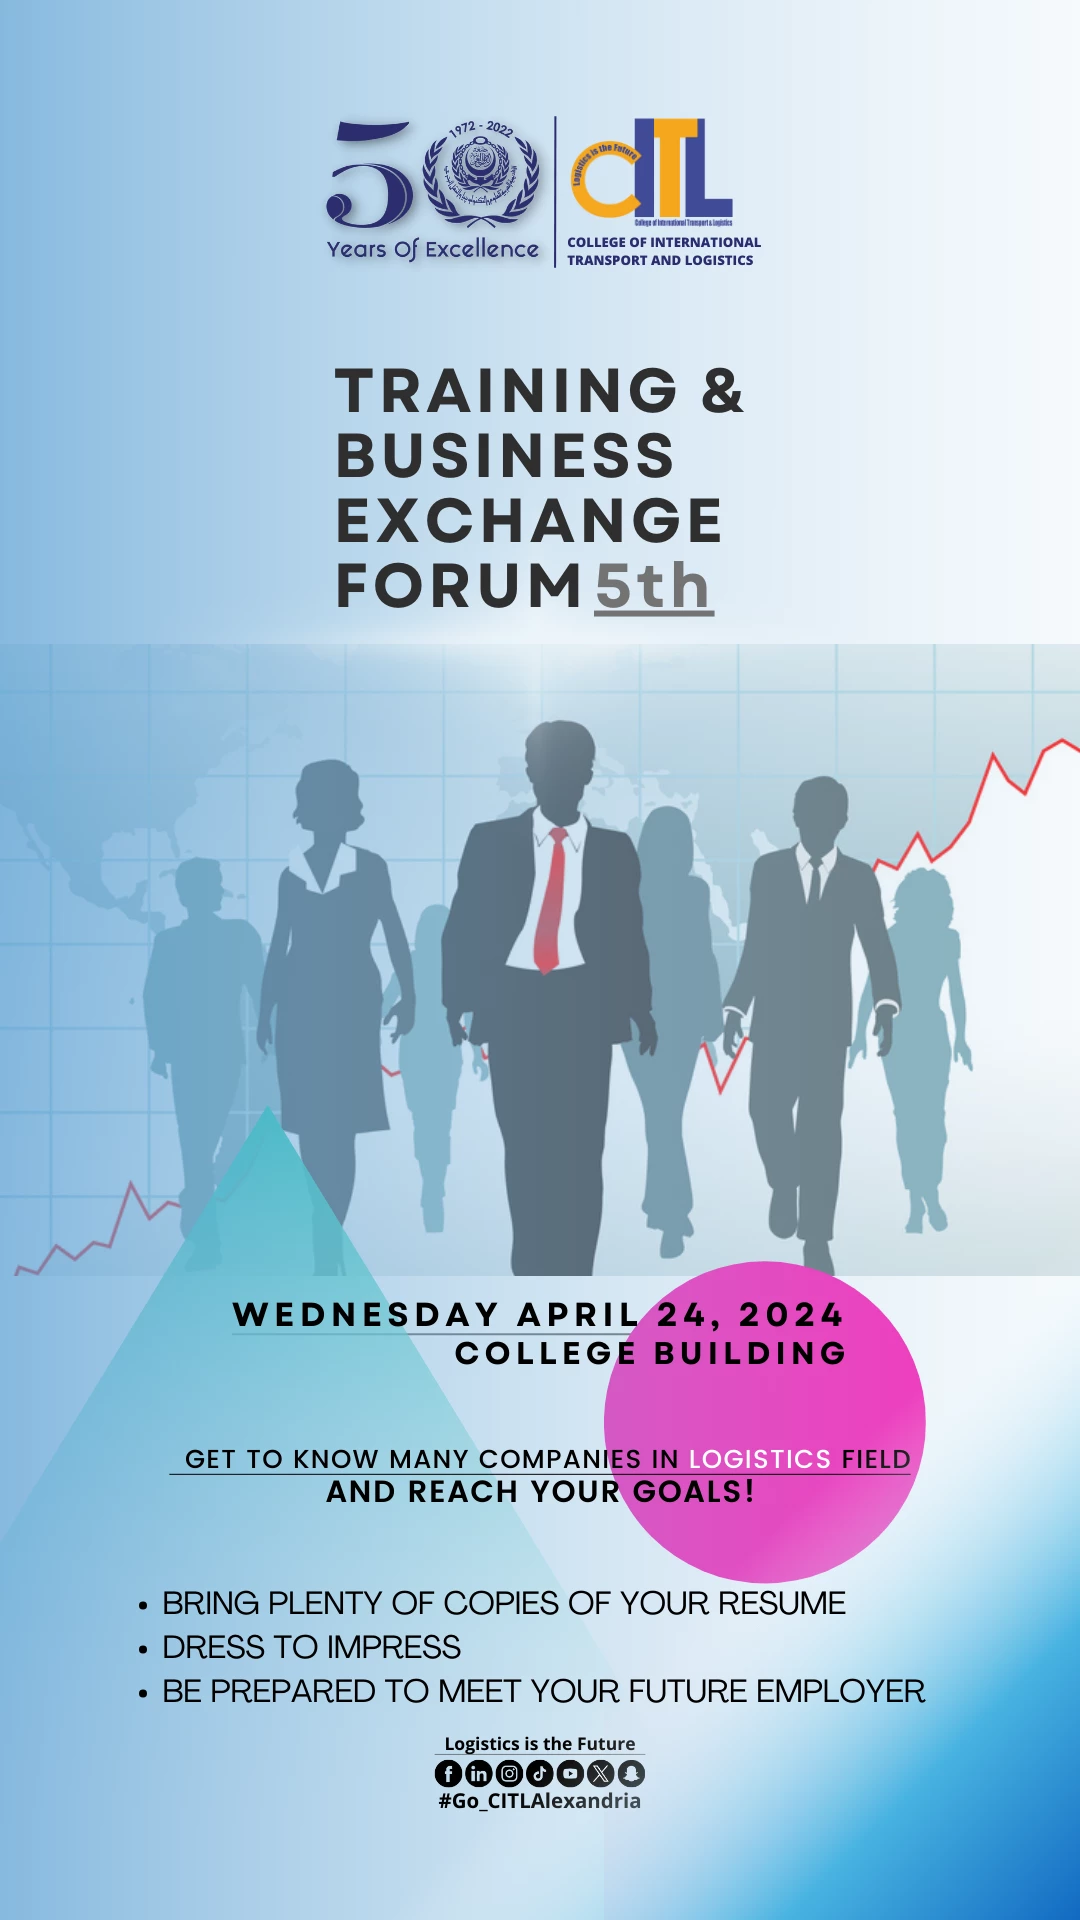 Training & Business Exchange Forum 5th